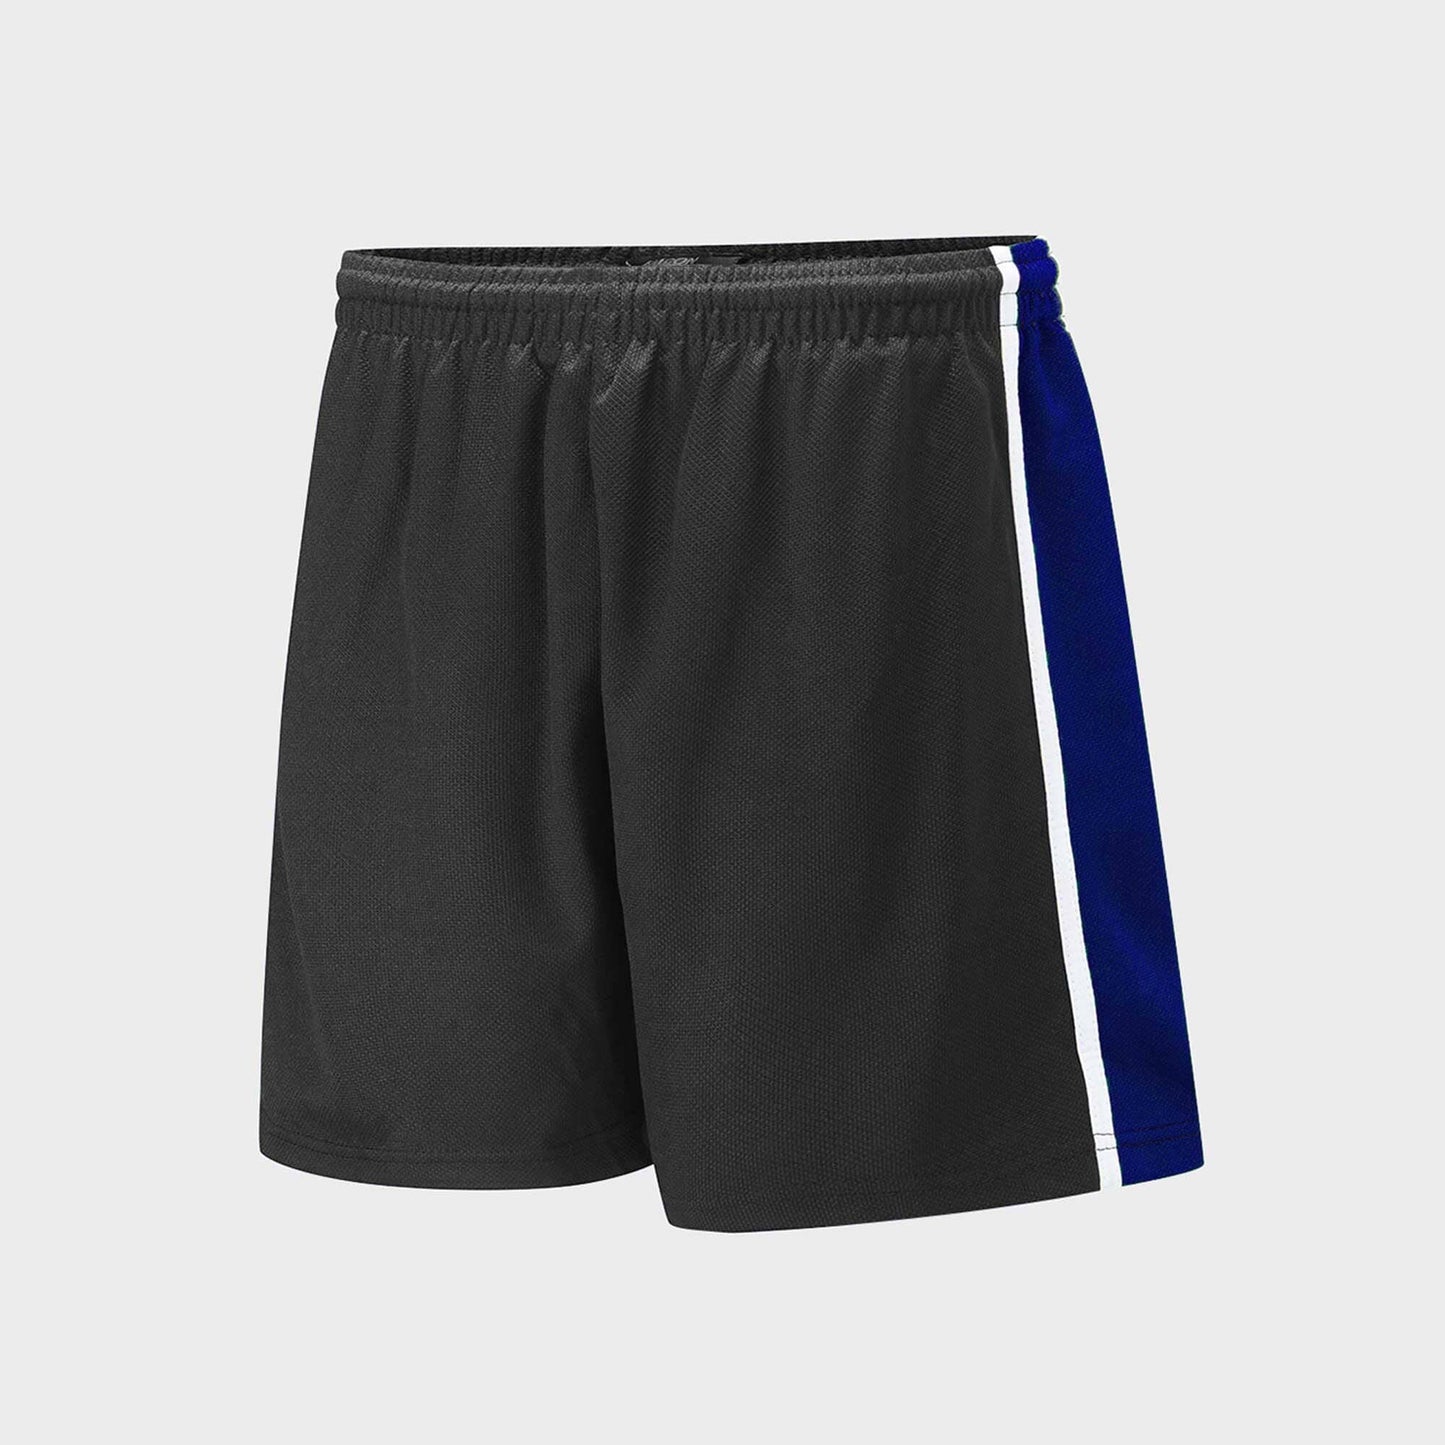 Falcon Men's Contrast panel Shorts Men's Shorts HAS Apparel Black & Blue 2XS 